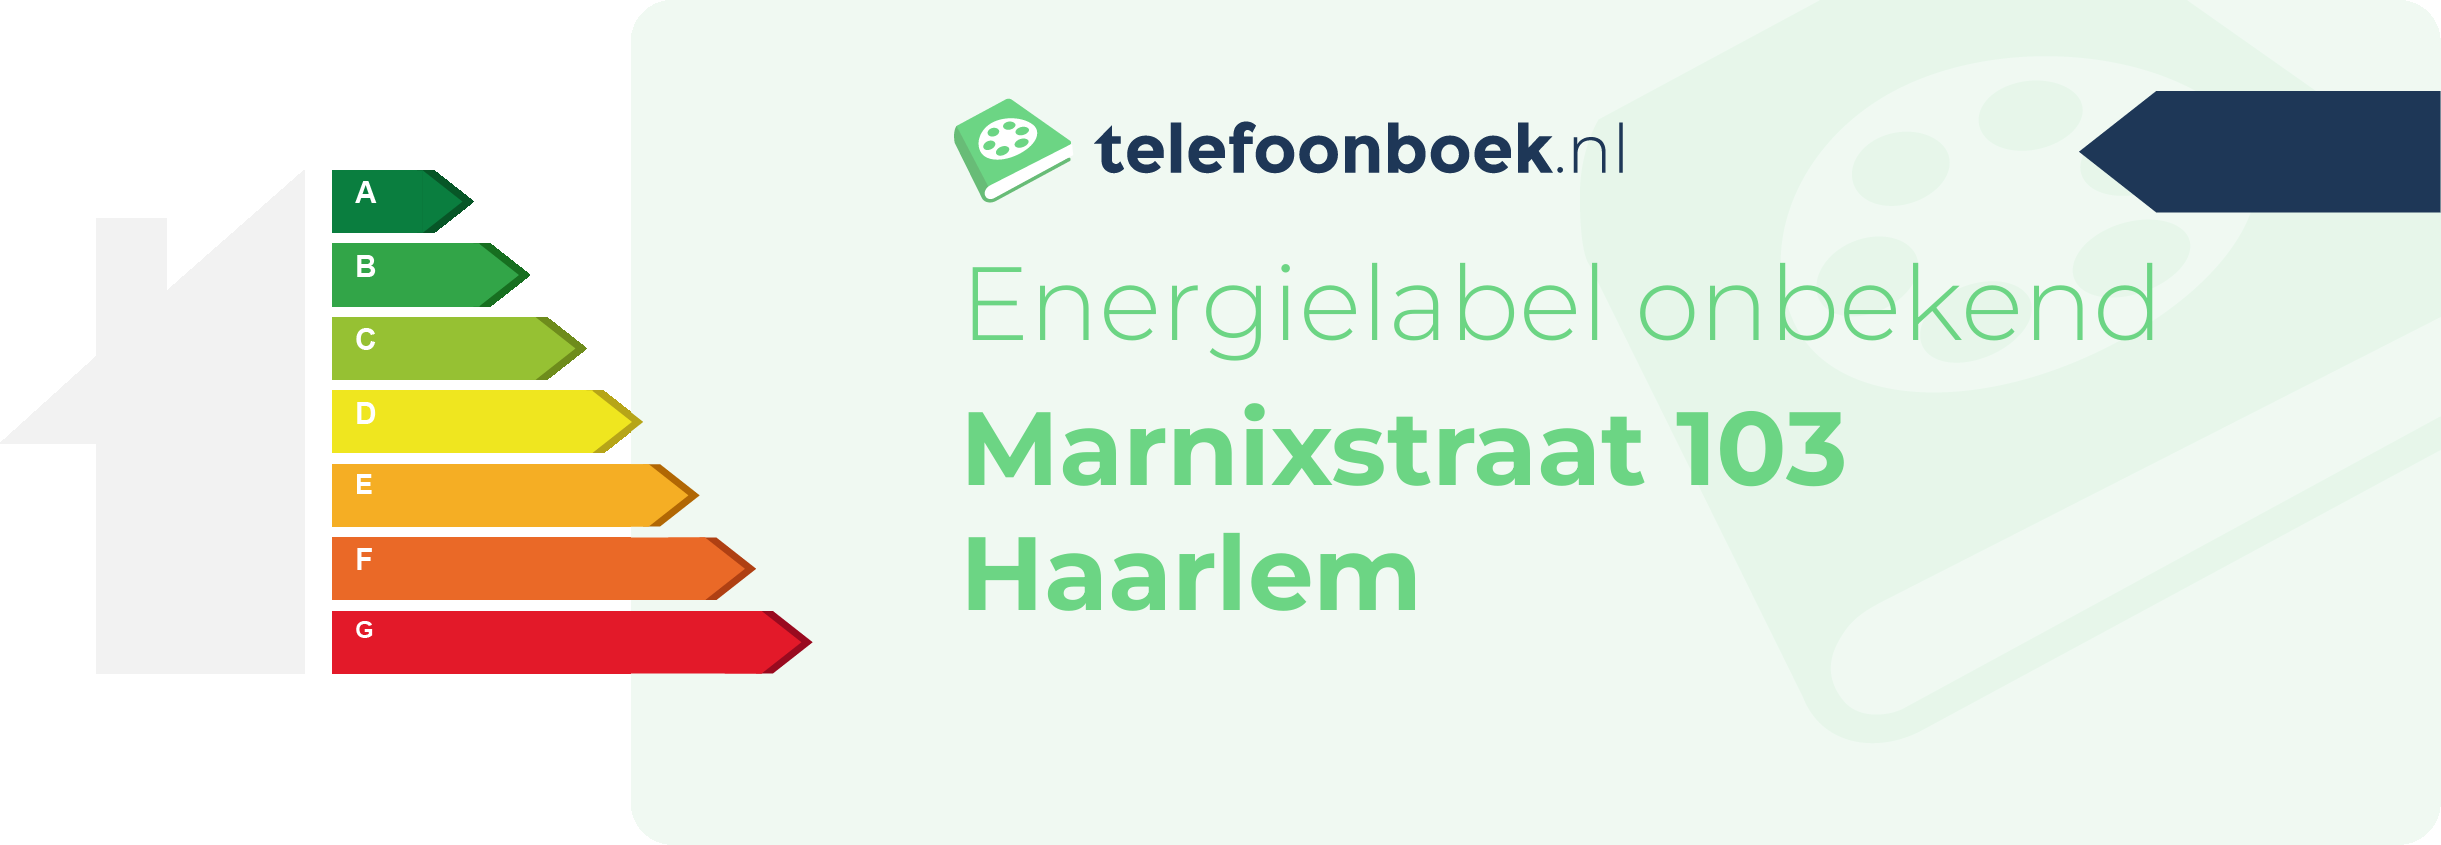 Energielabel Marnixstraat 103 Haarlem